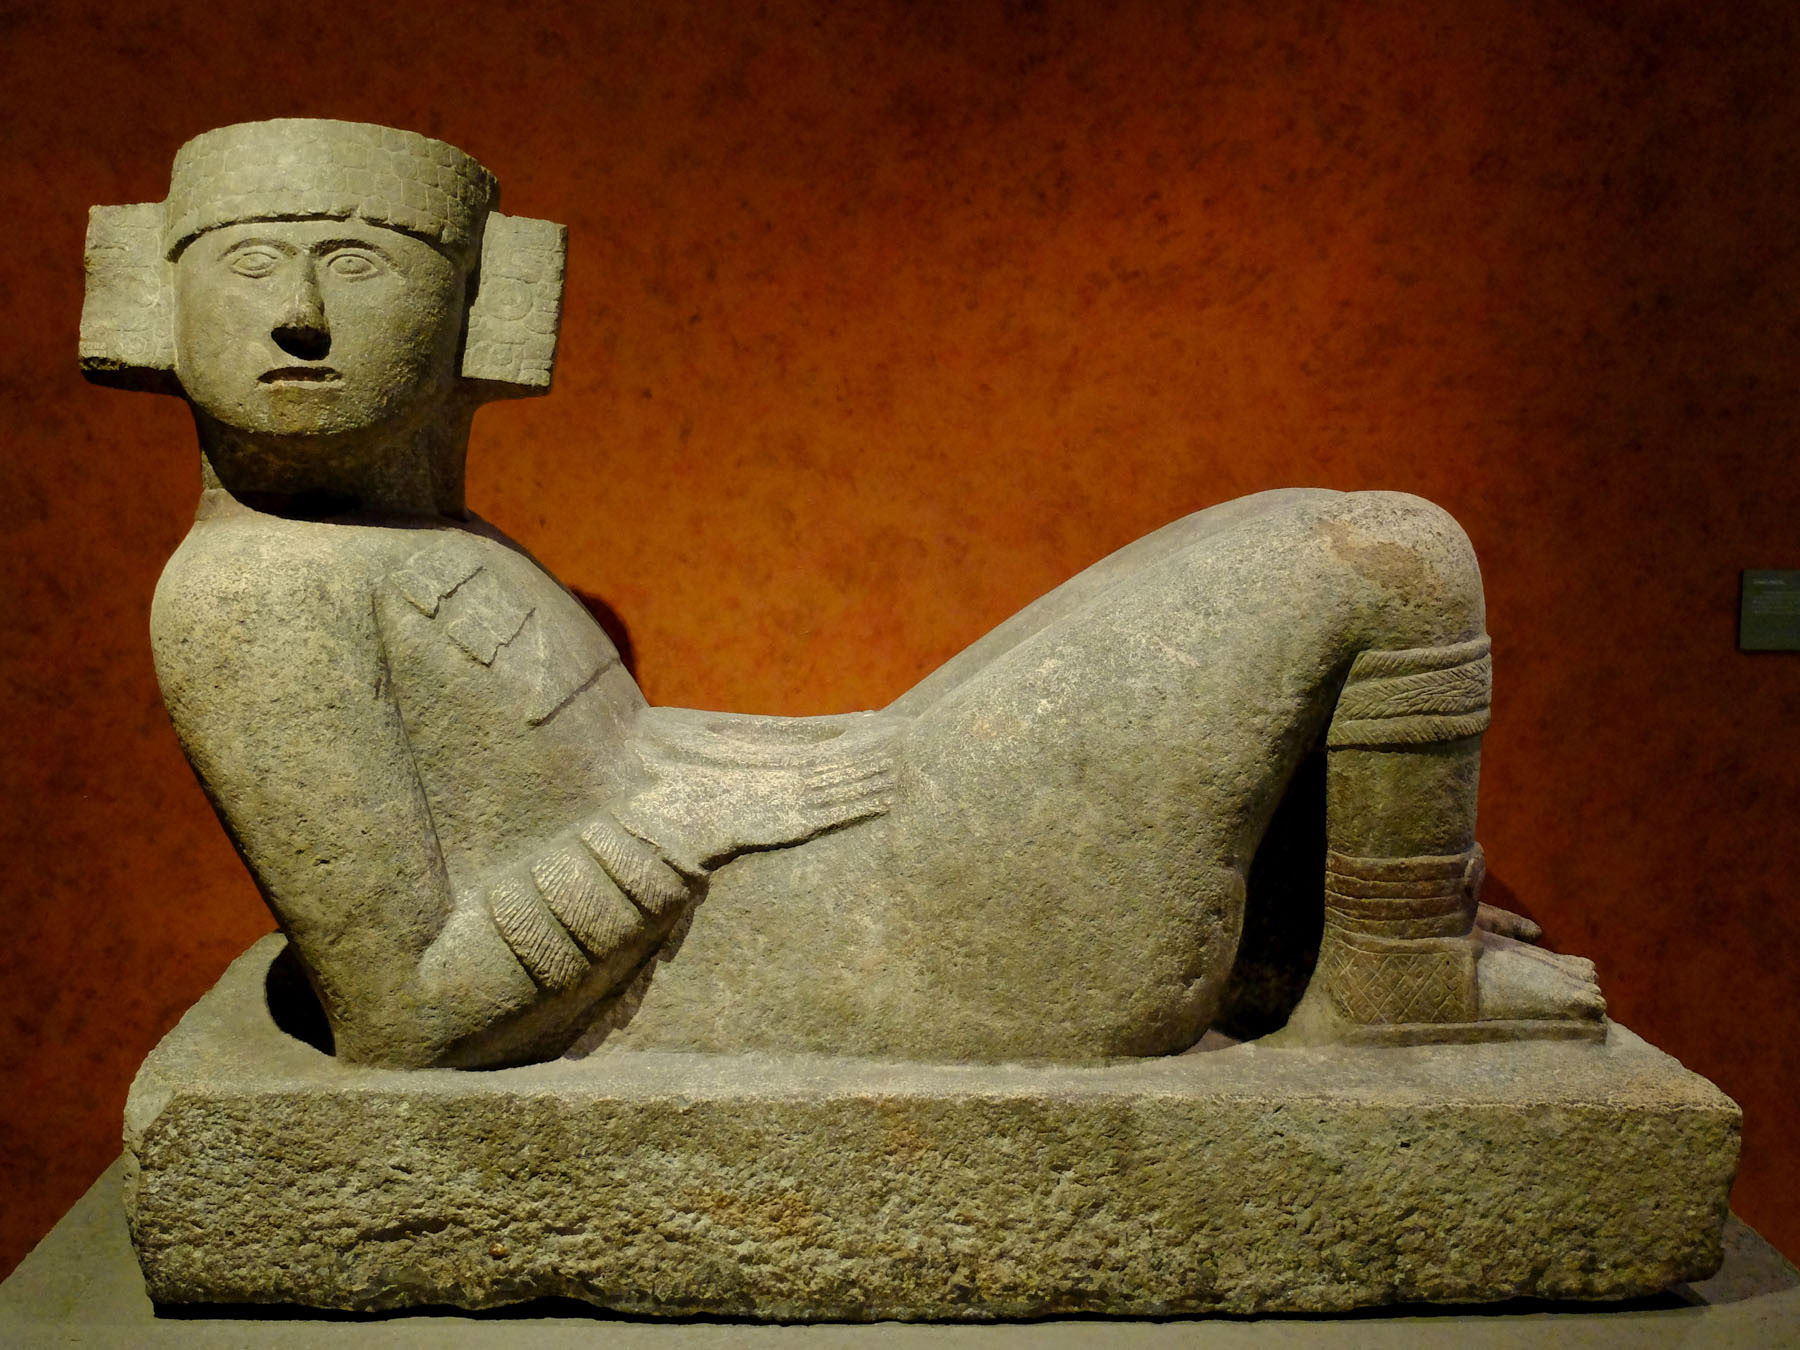 Stone sculpture of a reclining human figure.